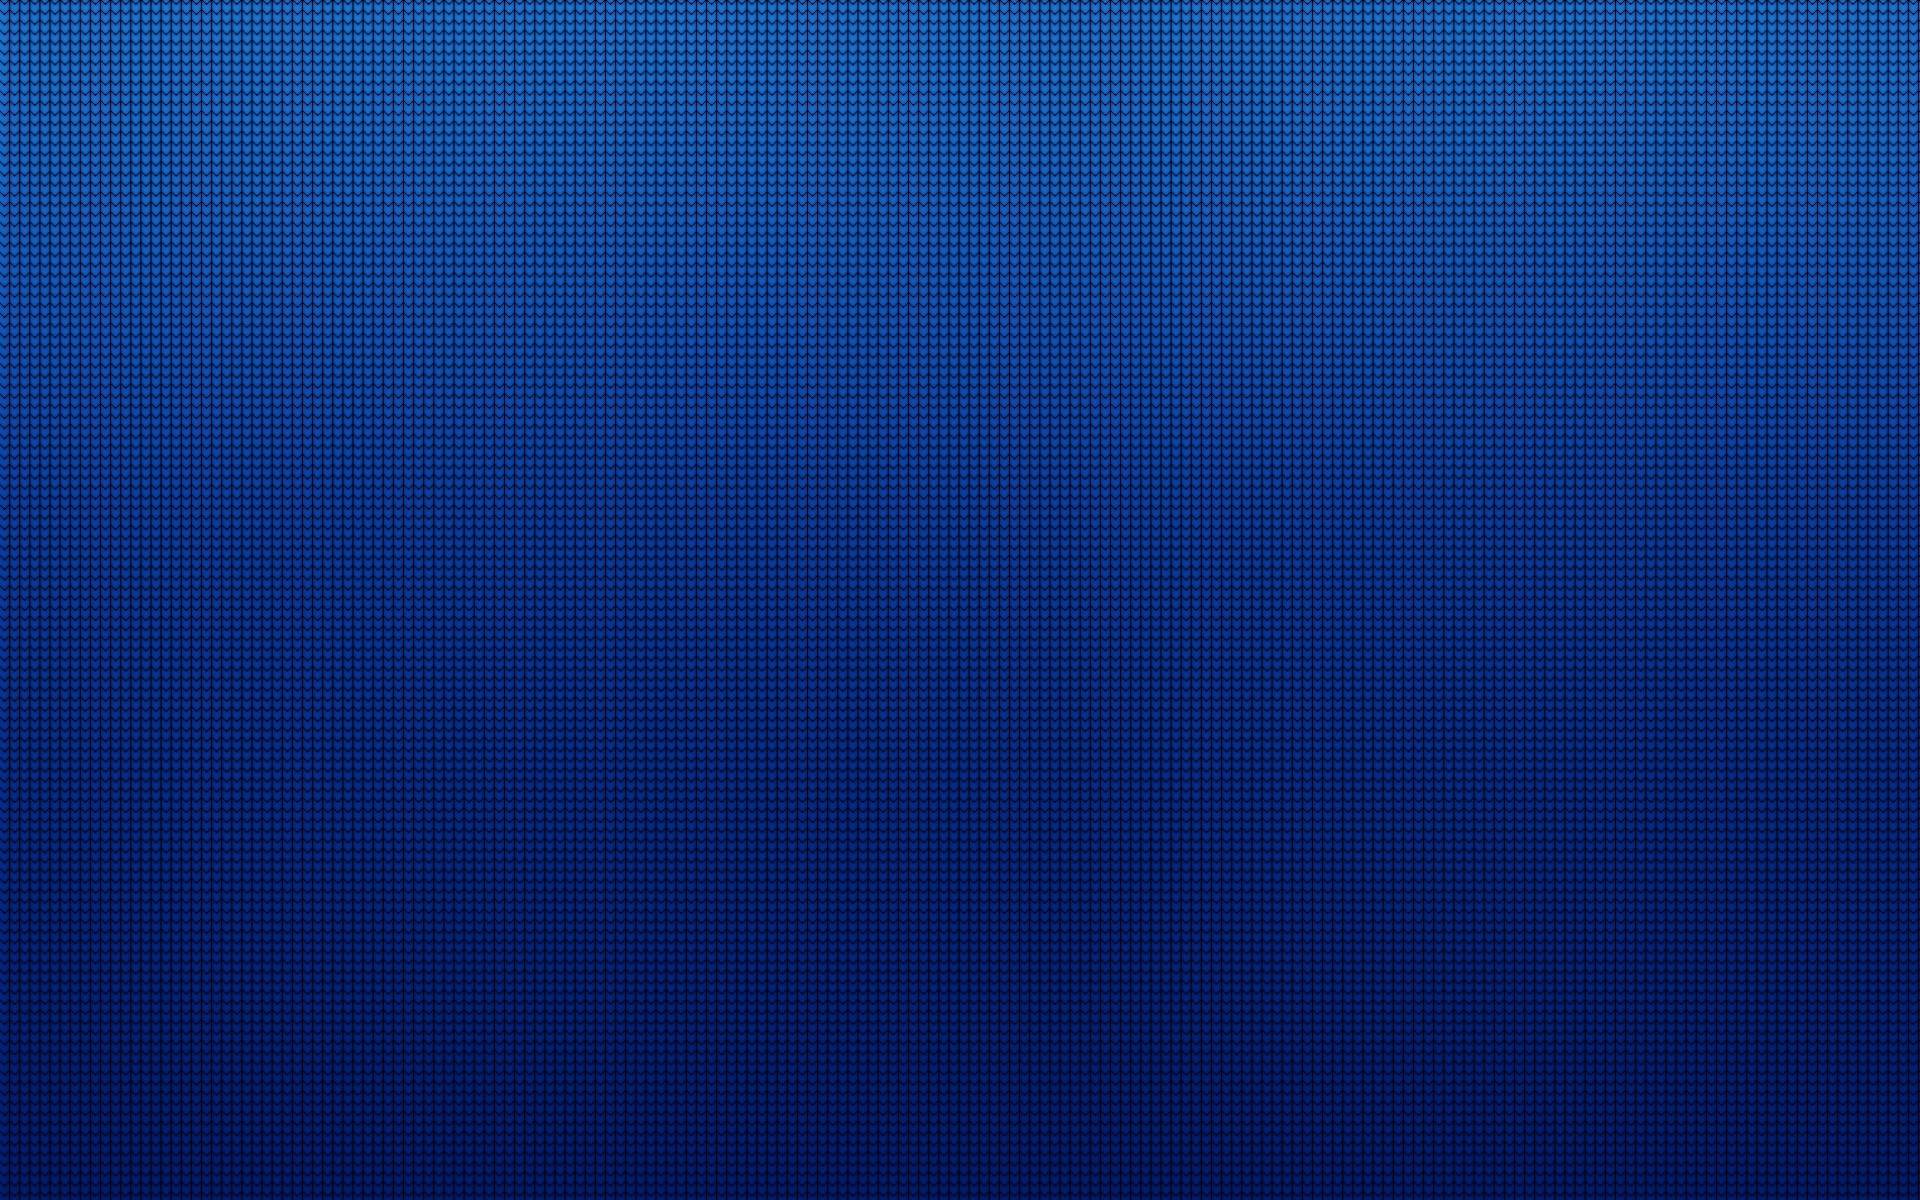 Dark Blue Wallpaper Background, Blue Background, Texture, Background  Background Image And Wallpaper for Free Download